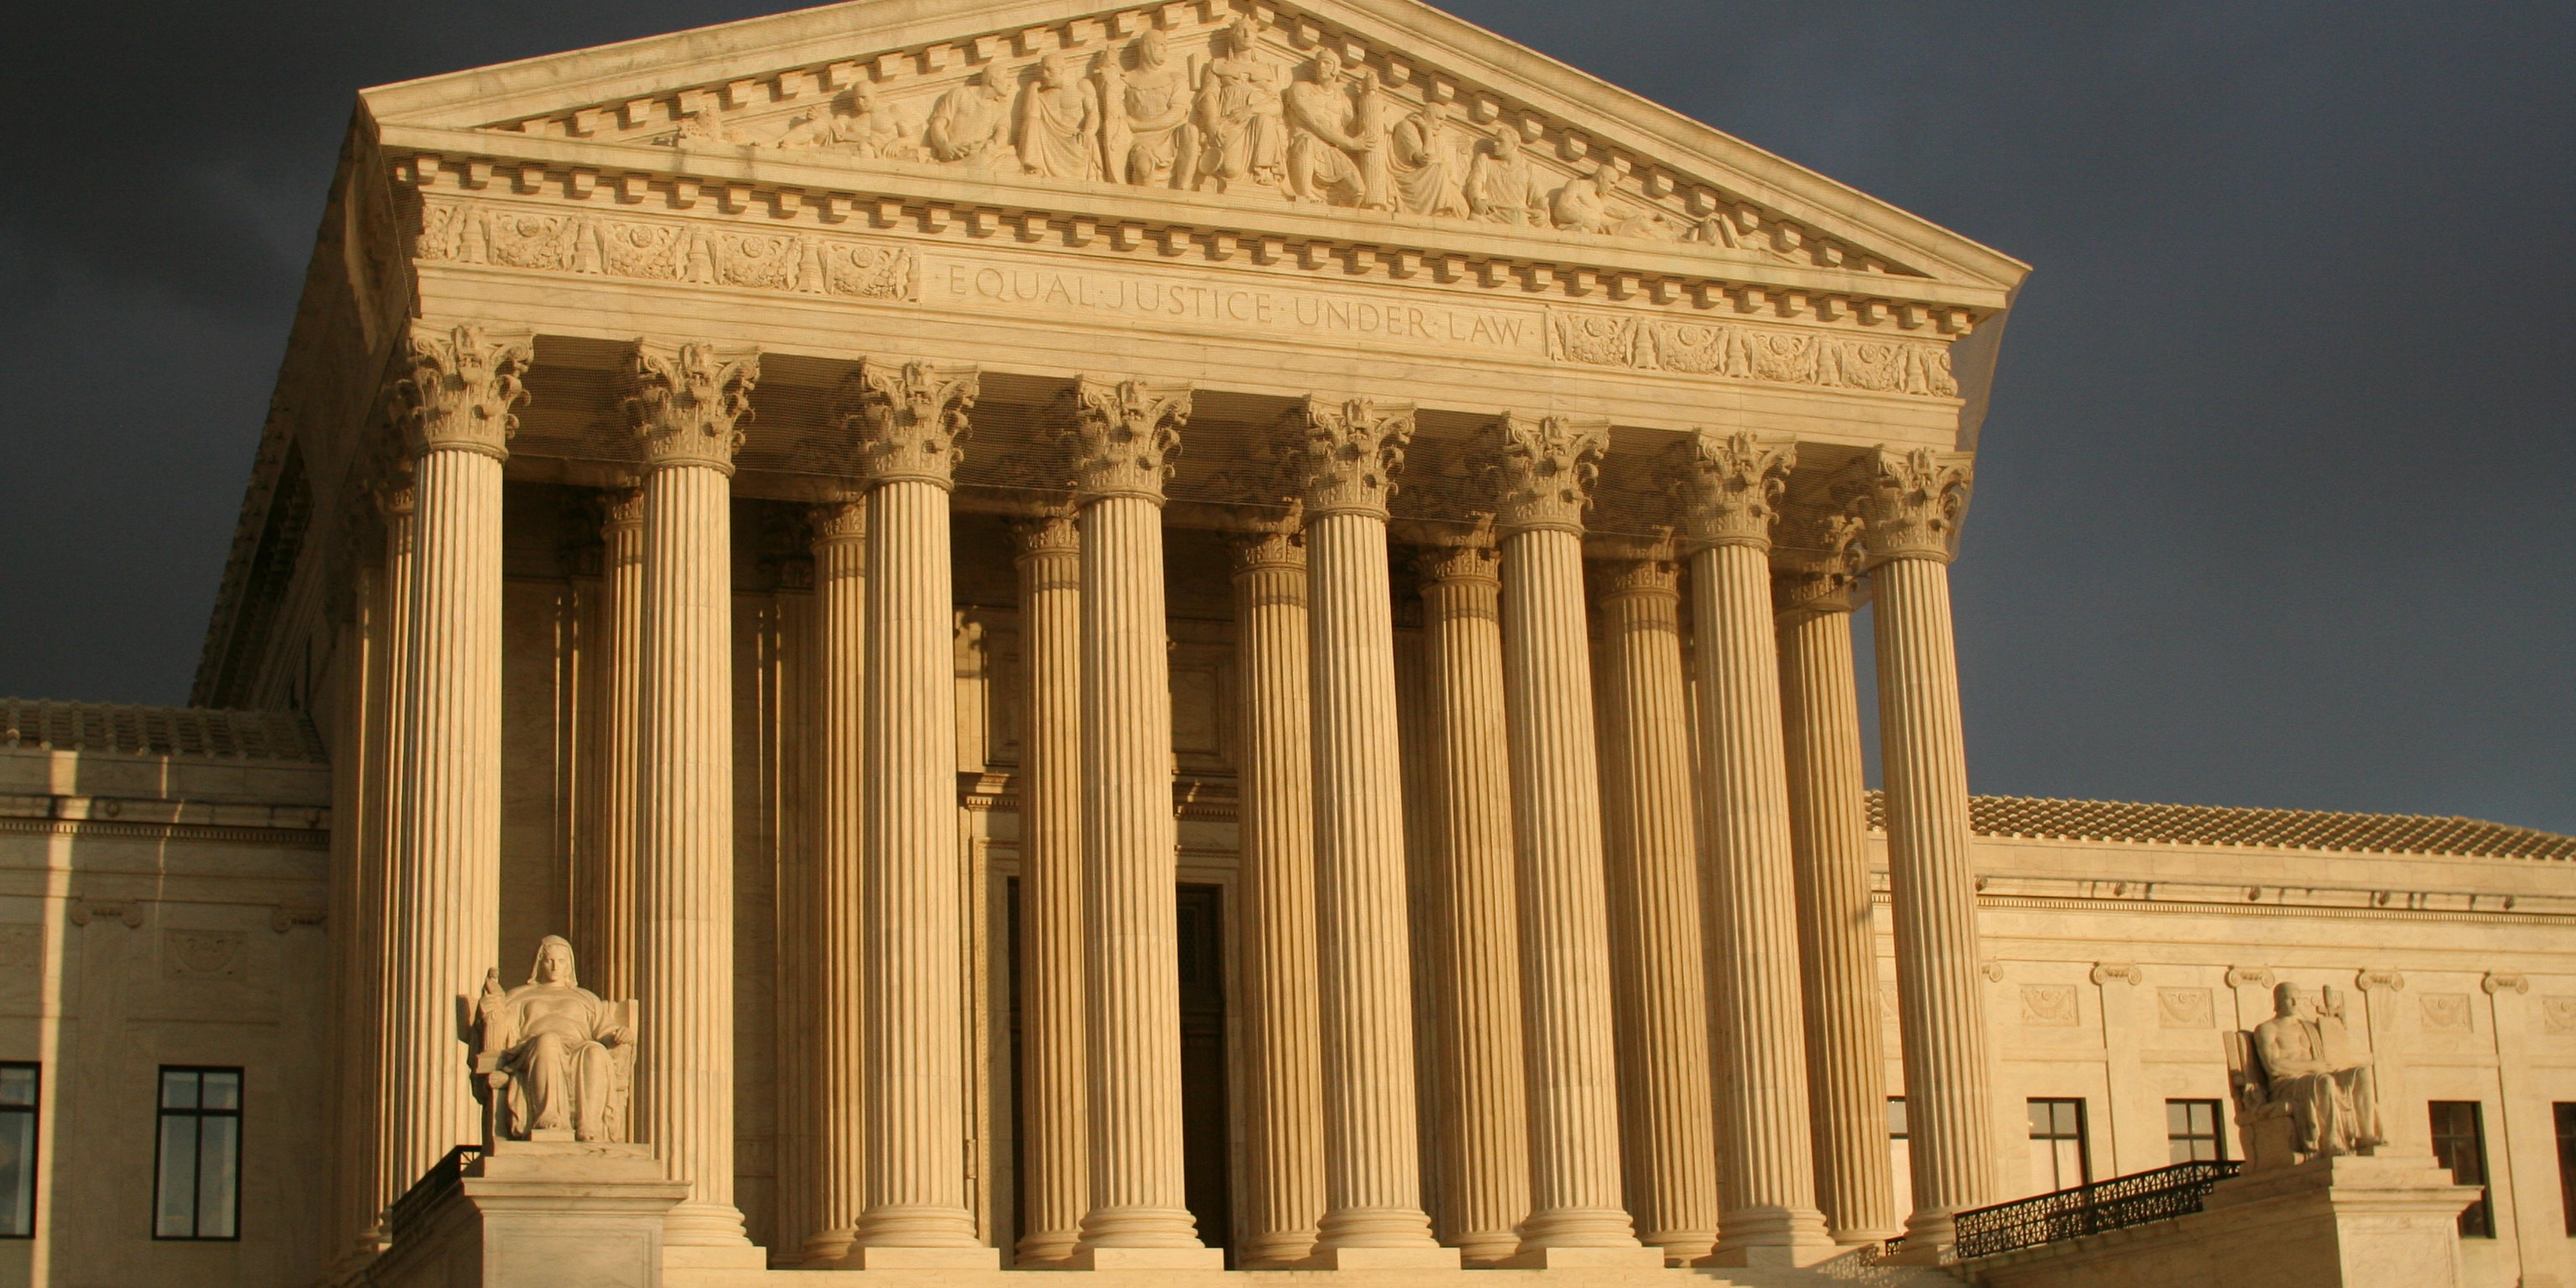 The U.S. Supreme Court building in Washington D.C. (Image by Eric E Johnson)